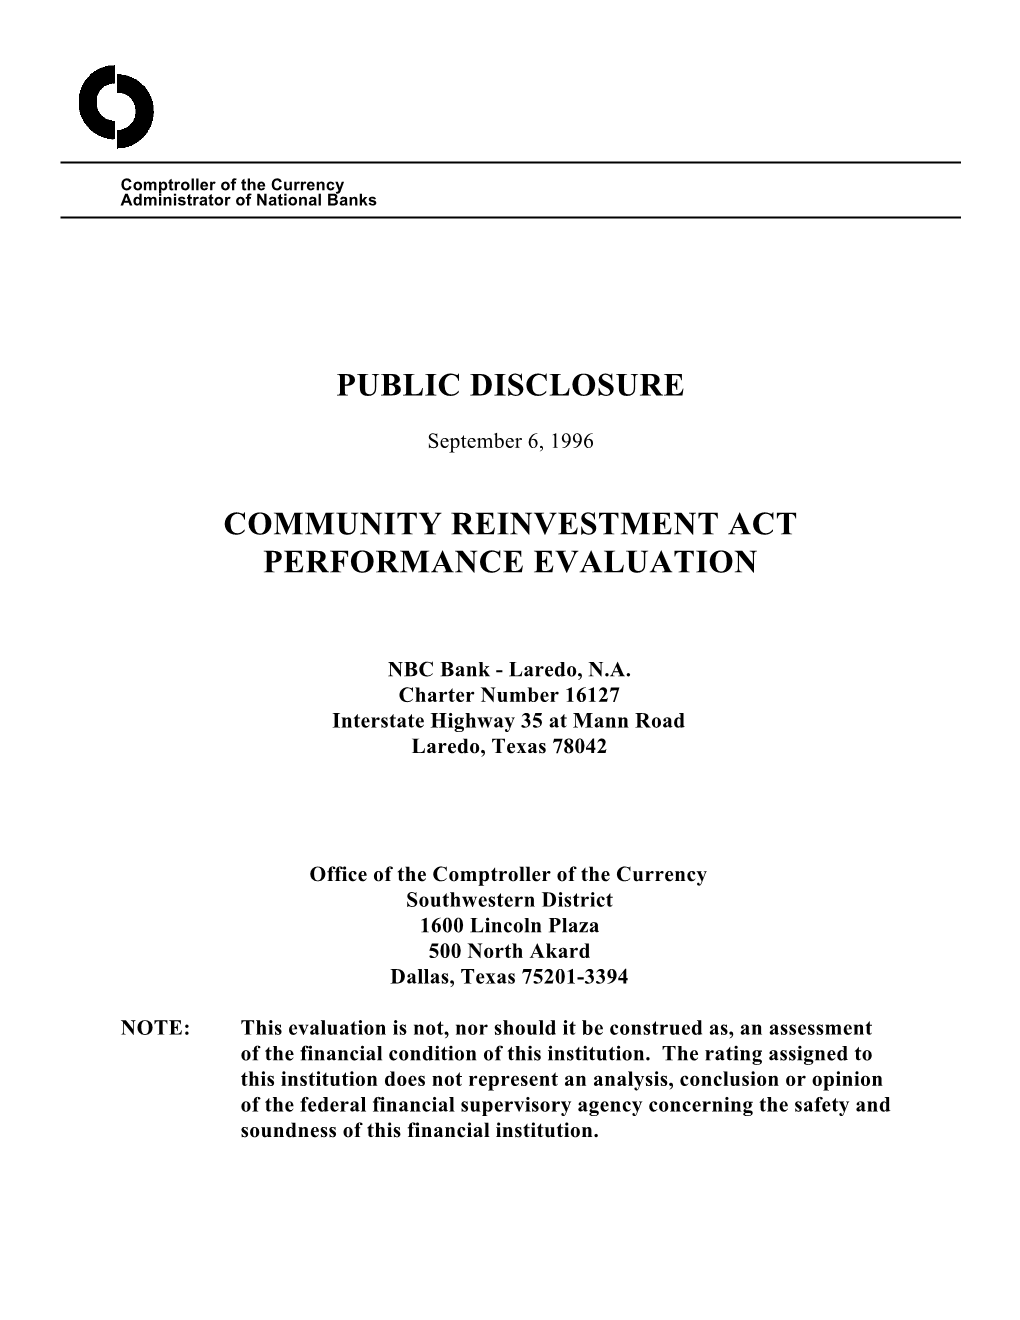 Public Disclosure Community Reinvestment Act